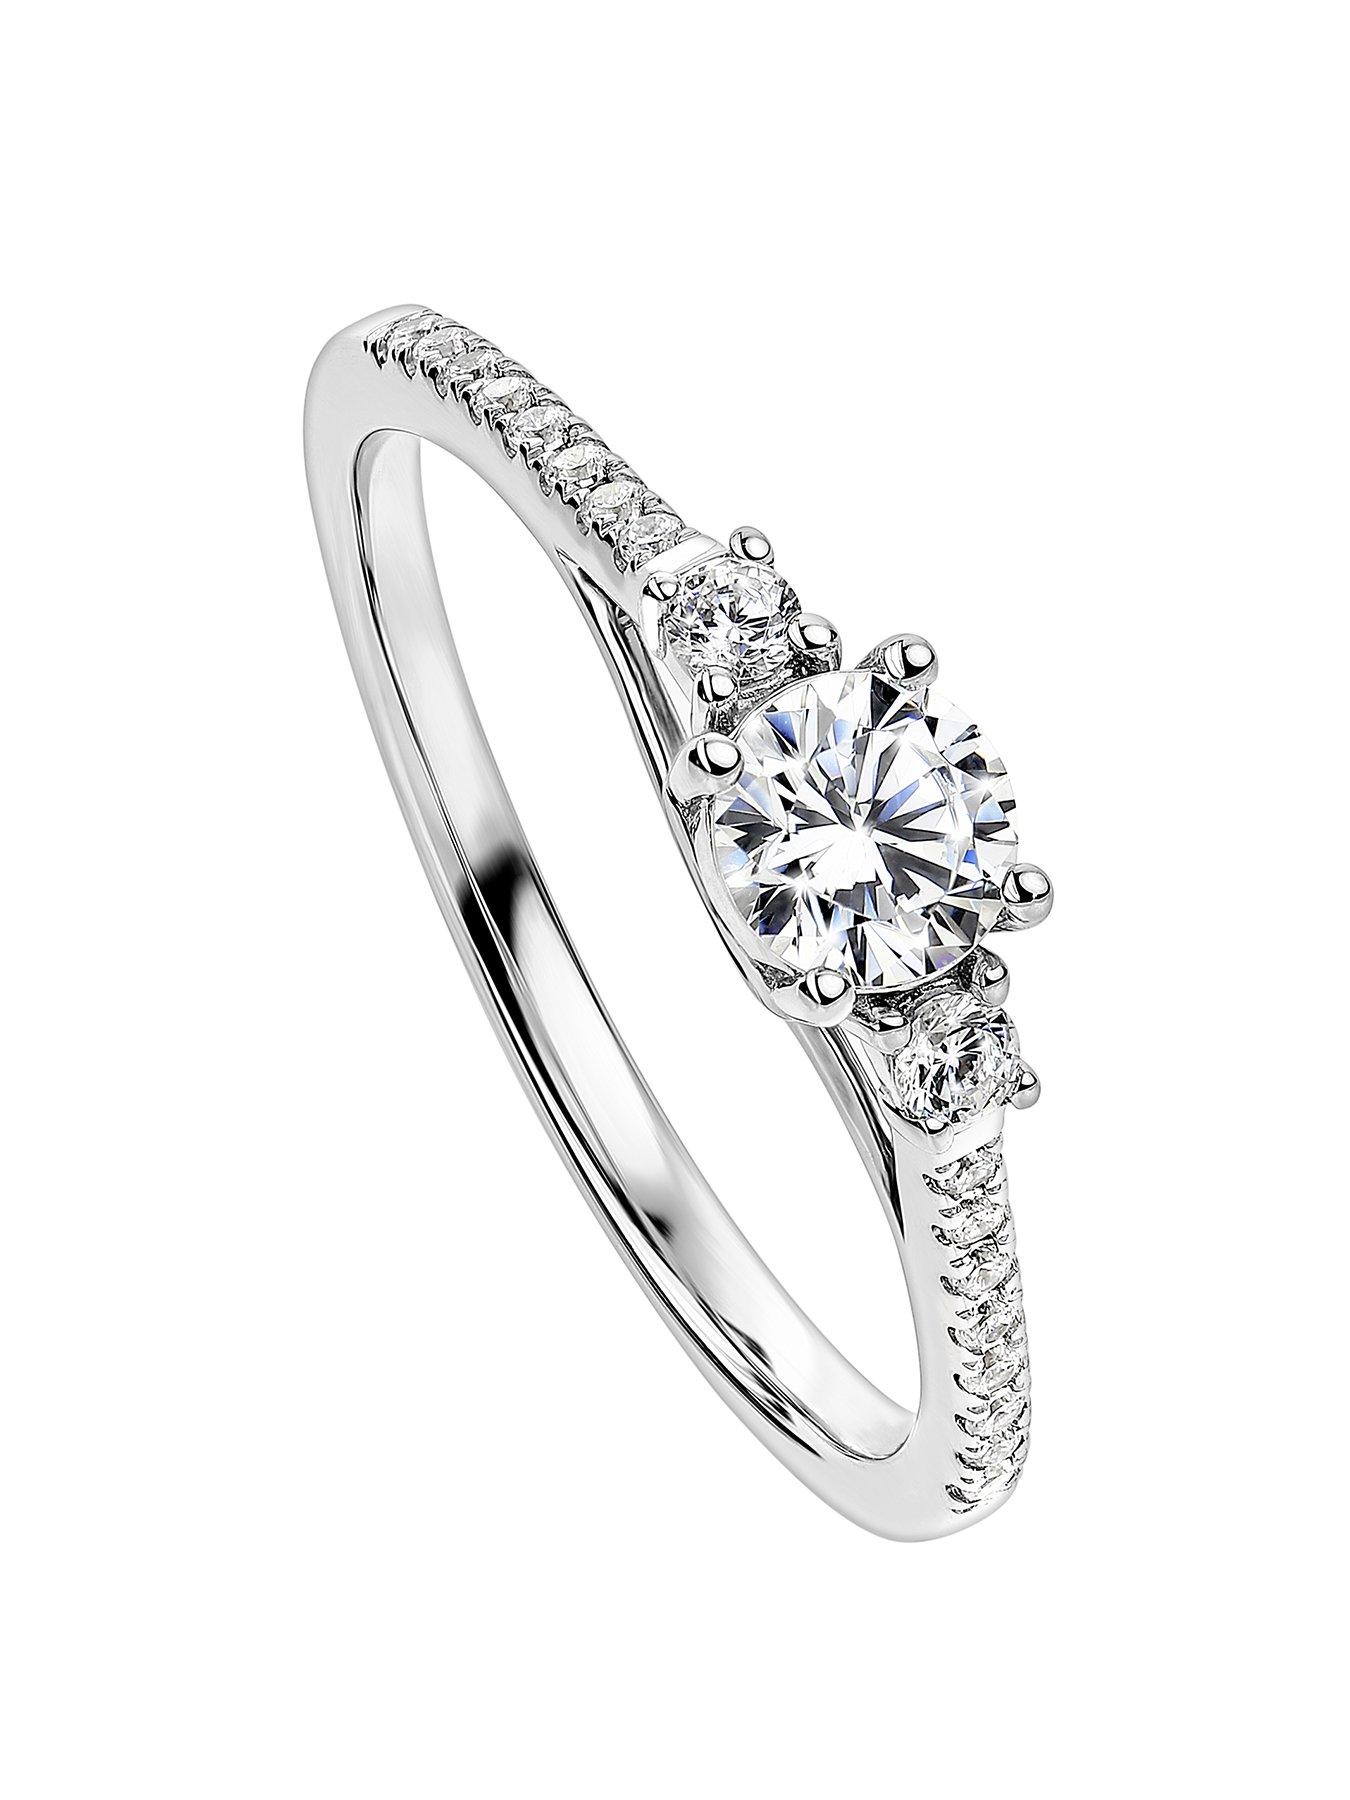 Shop Engagement Rings | Diamond Rings | Very Ireland